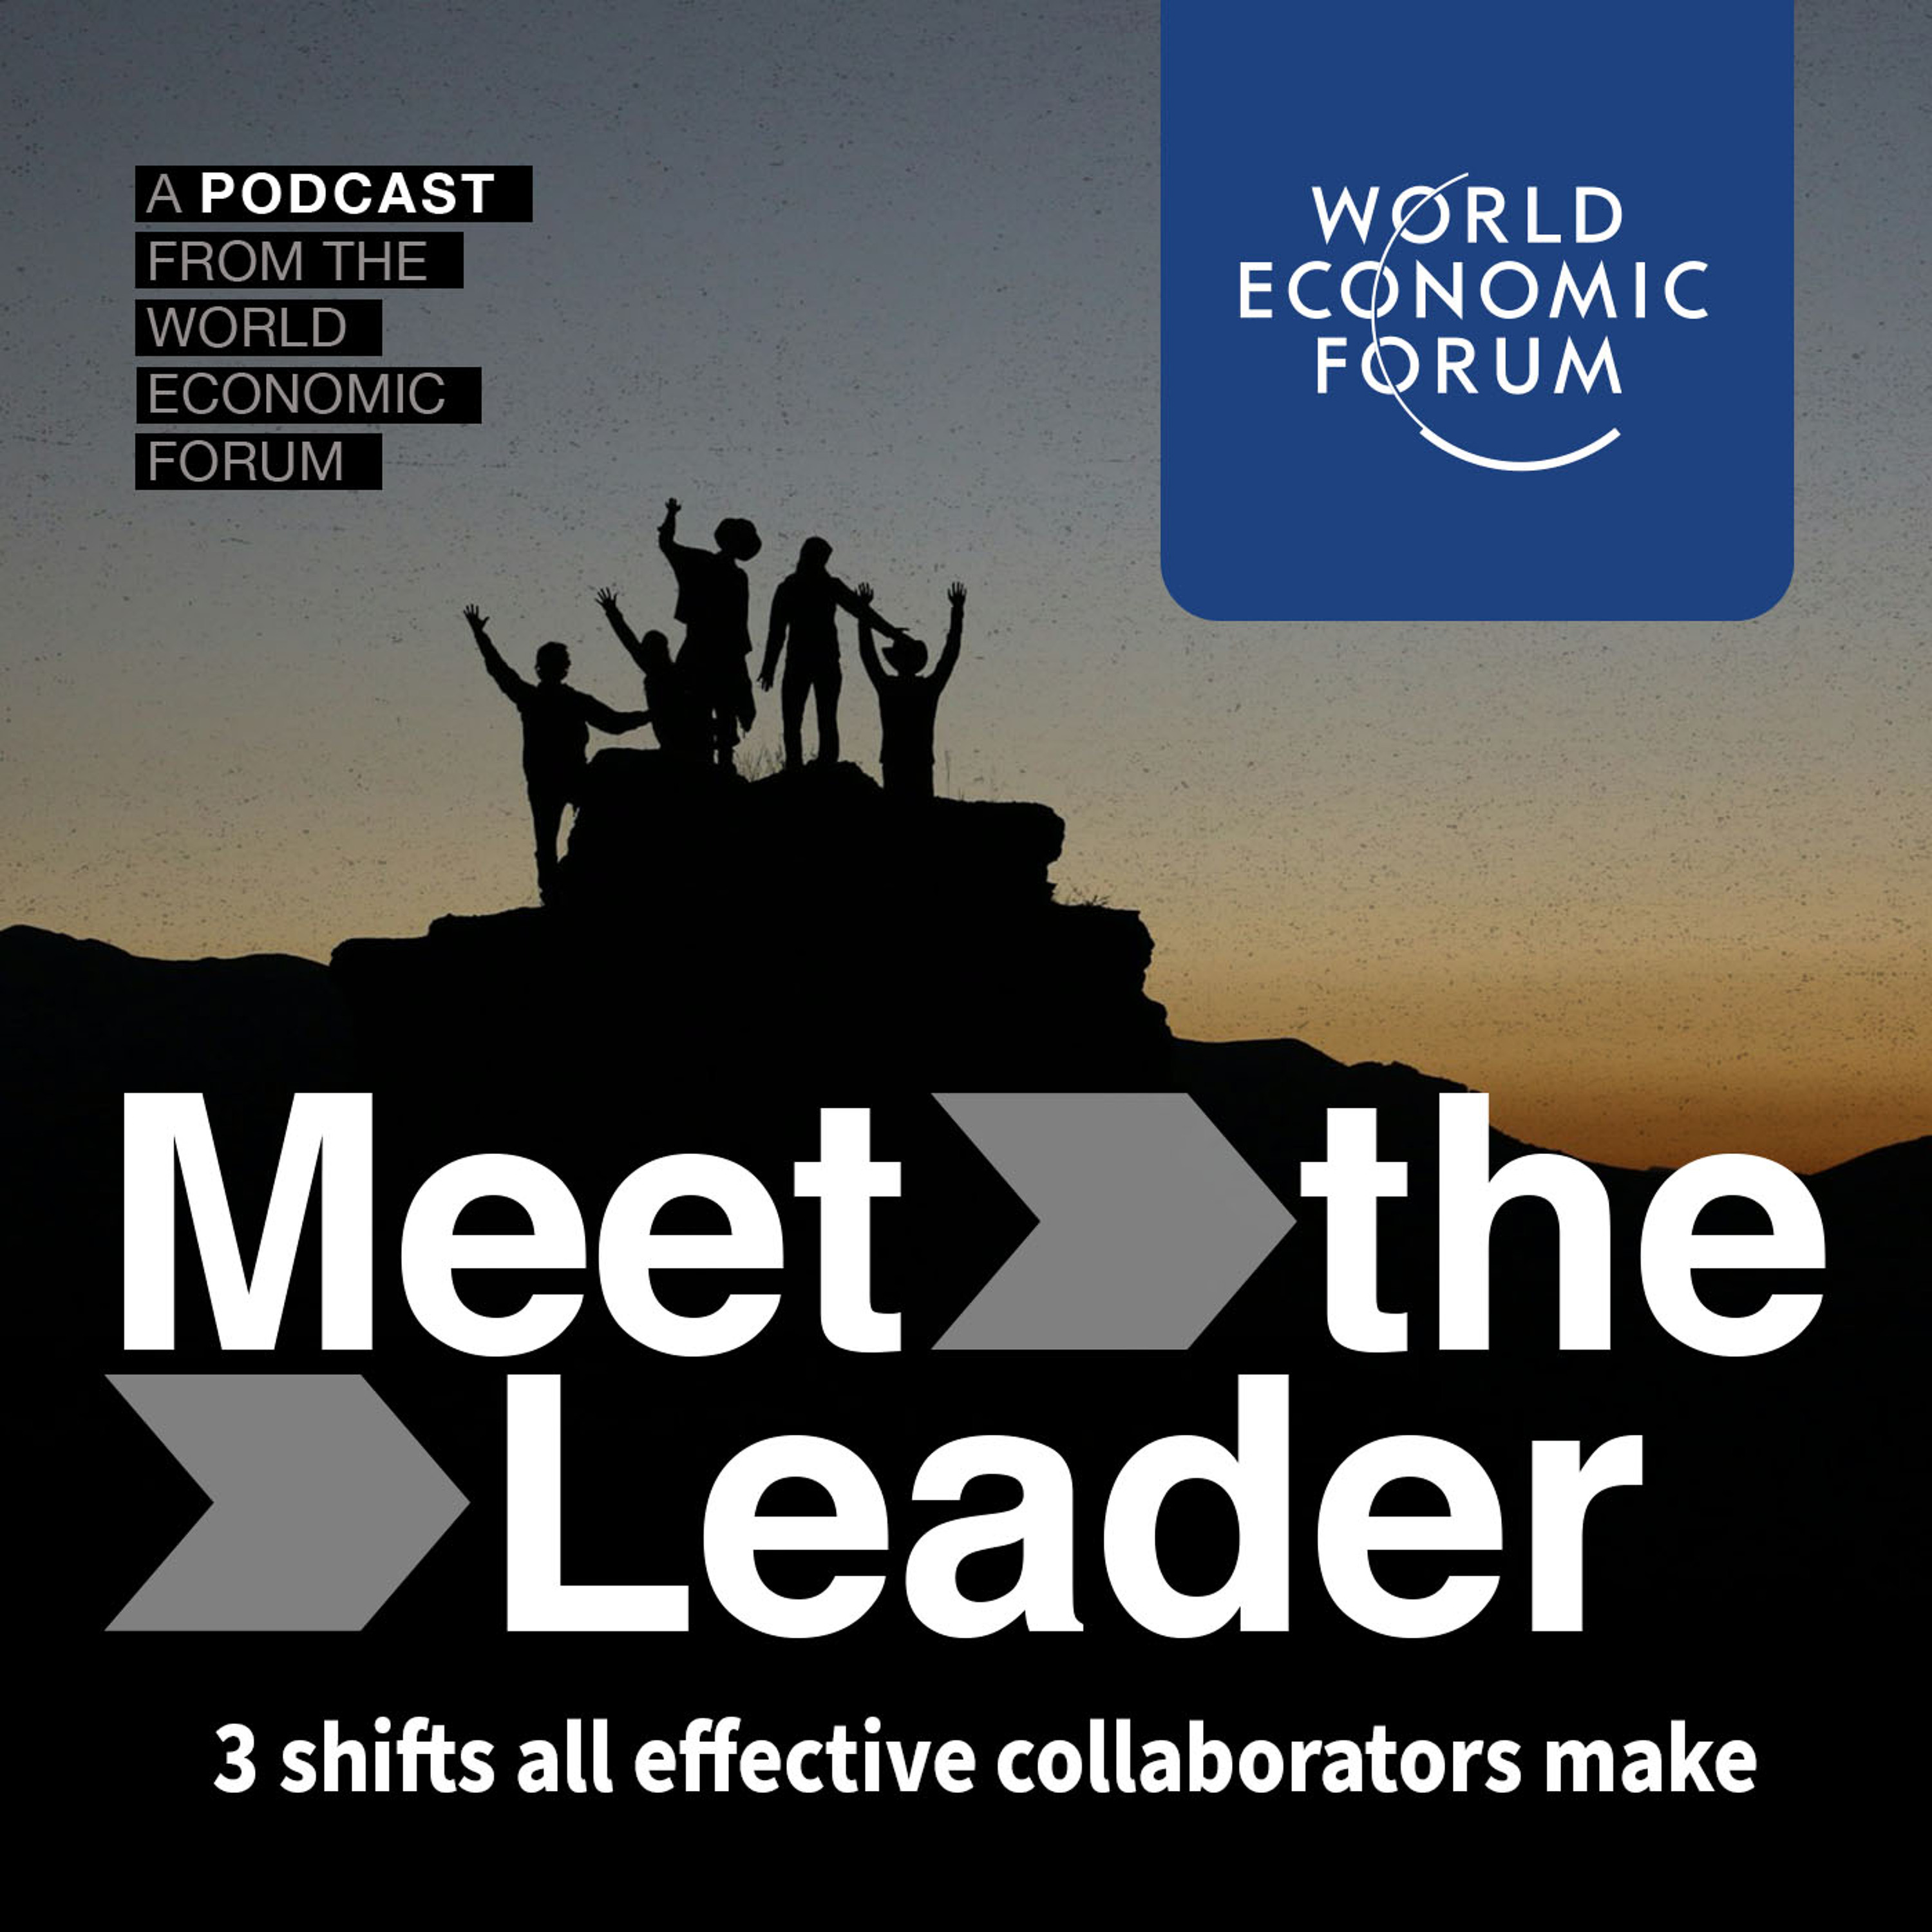 3 shifts all effective collaborators make